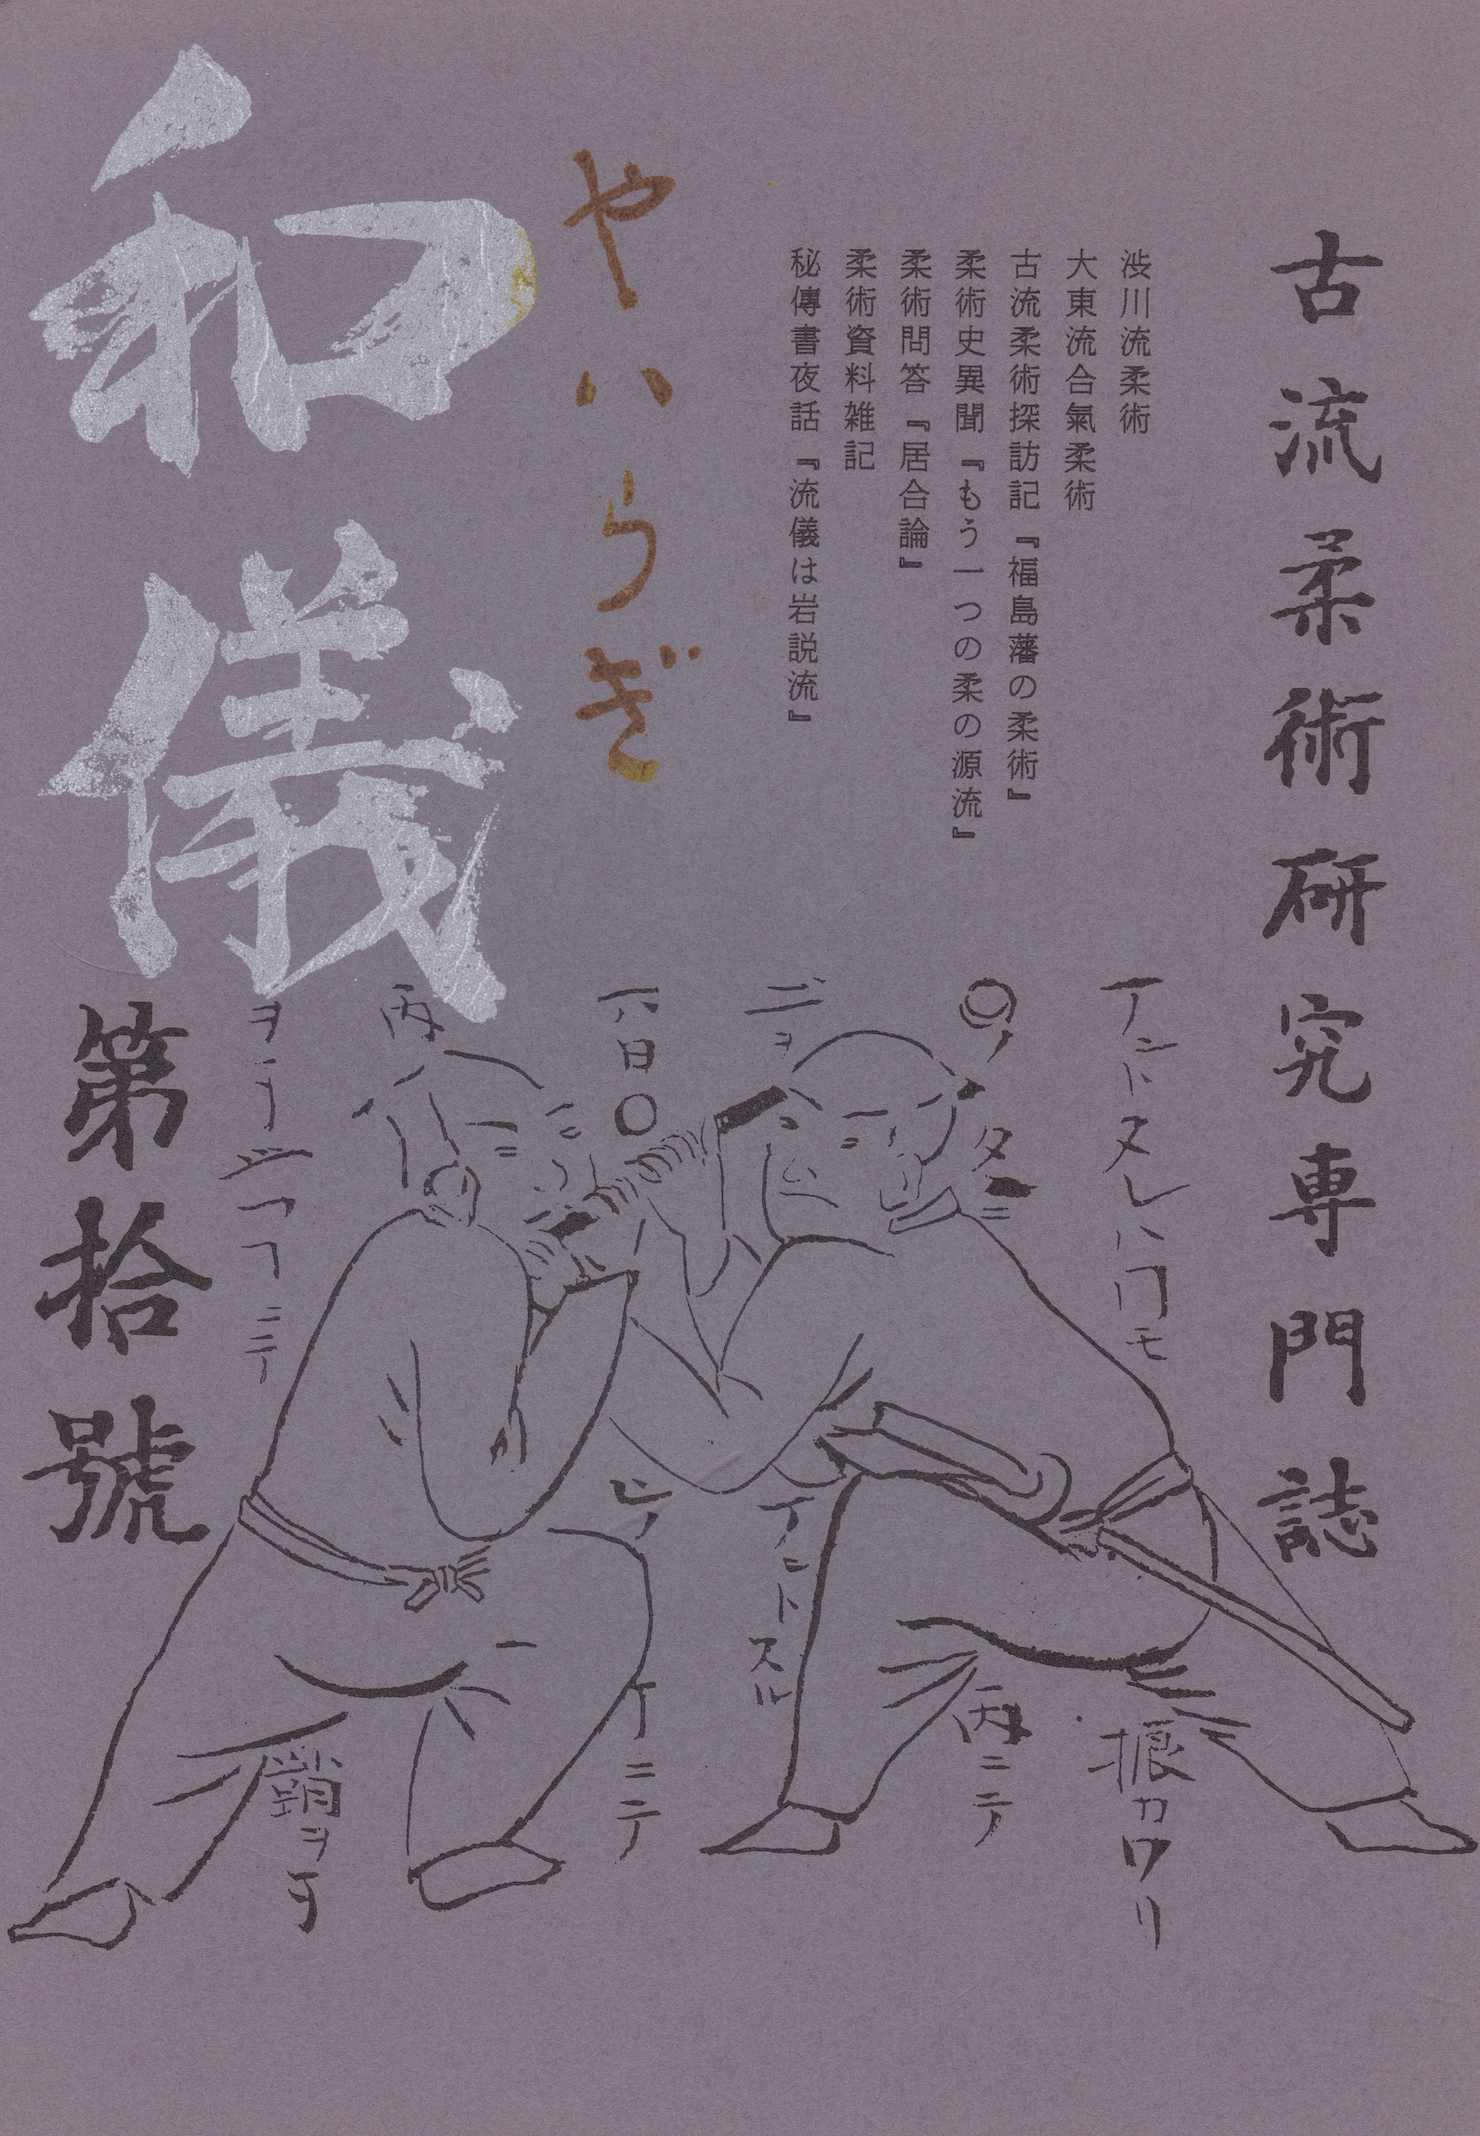 Yairagi Koryu Jujutsu Research Journal #10 (Preowned)